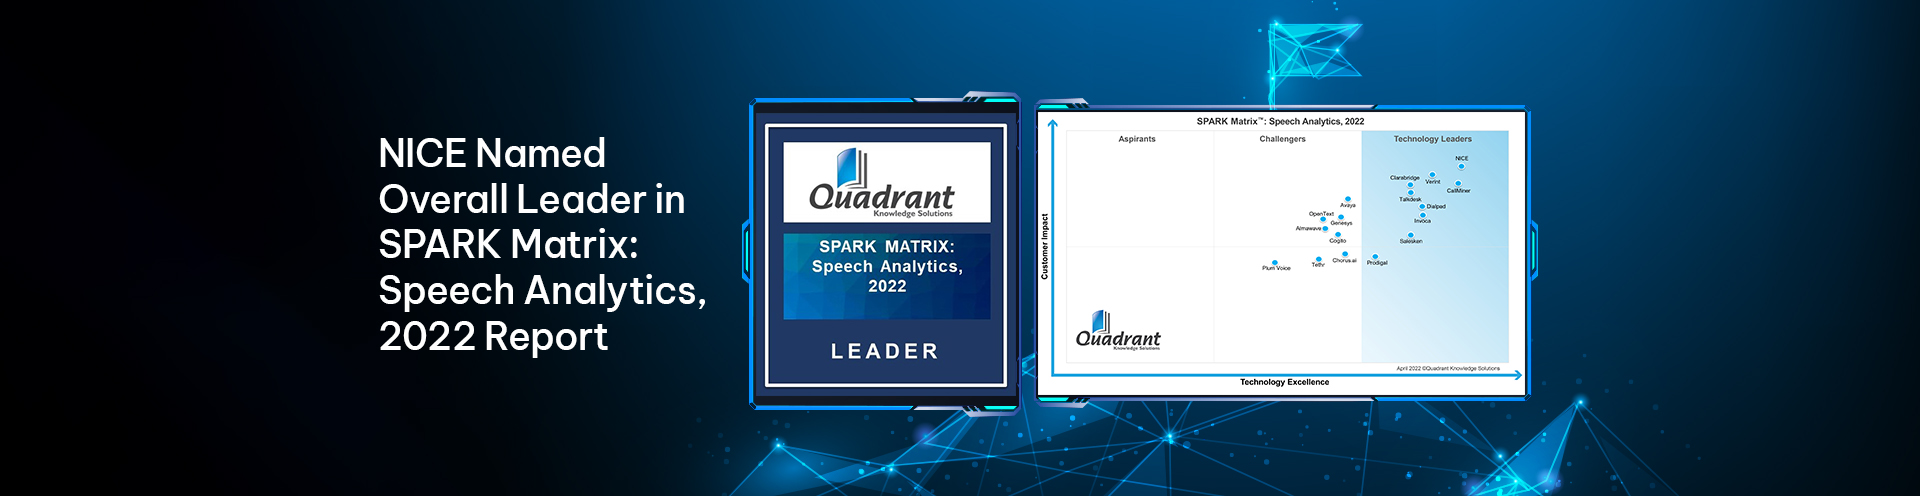 NICE Named Overall Leader in SPARK Matrix™ Speech Analytics 2022 Report